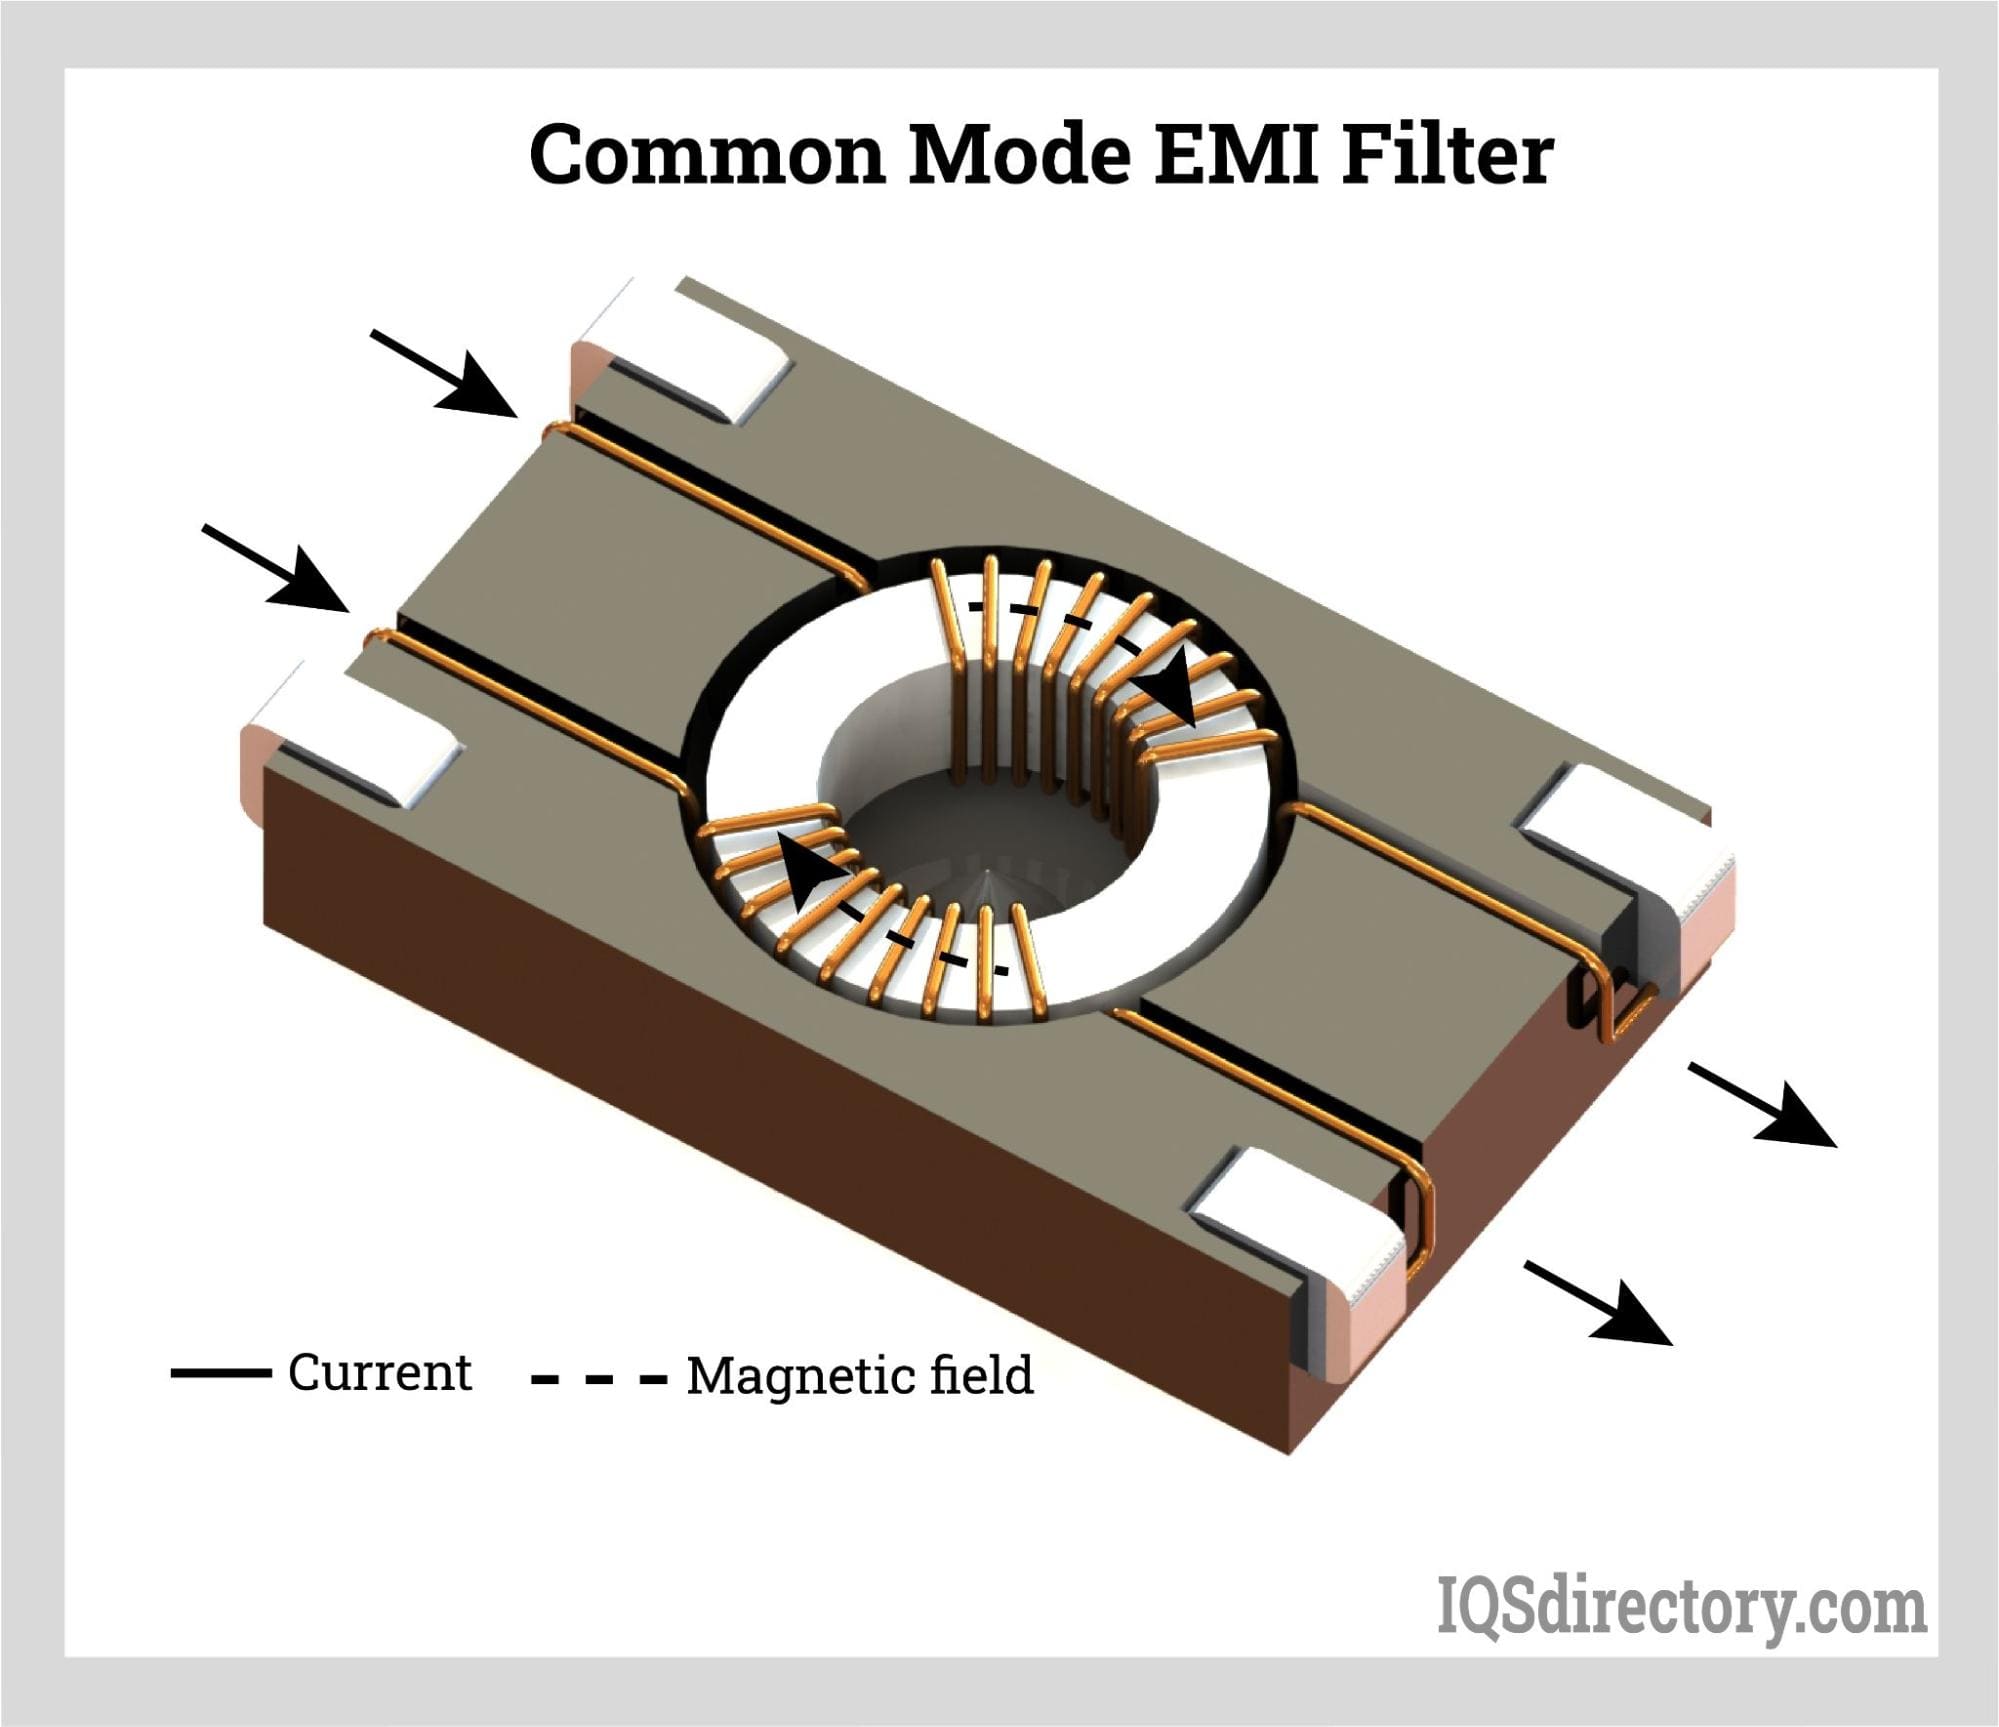 Common Mode EMI Filter